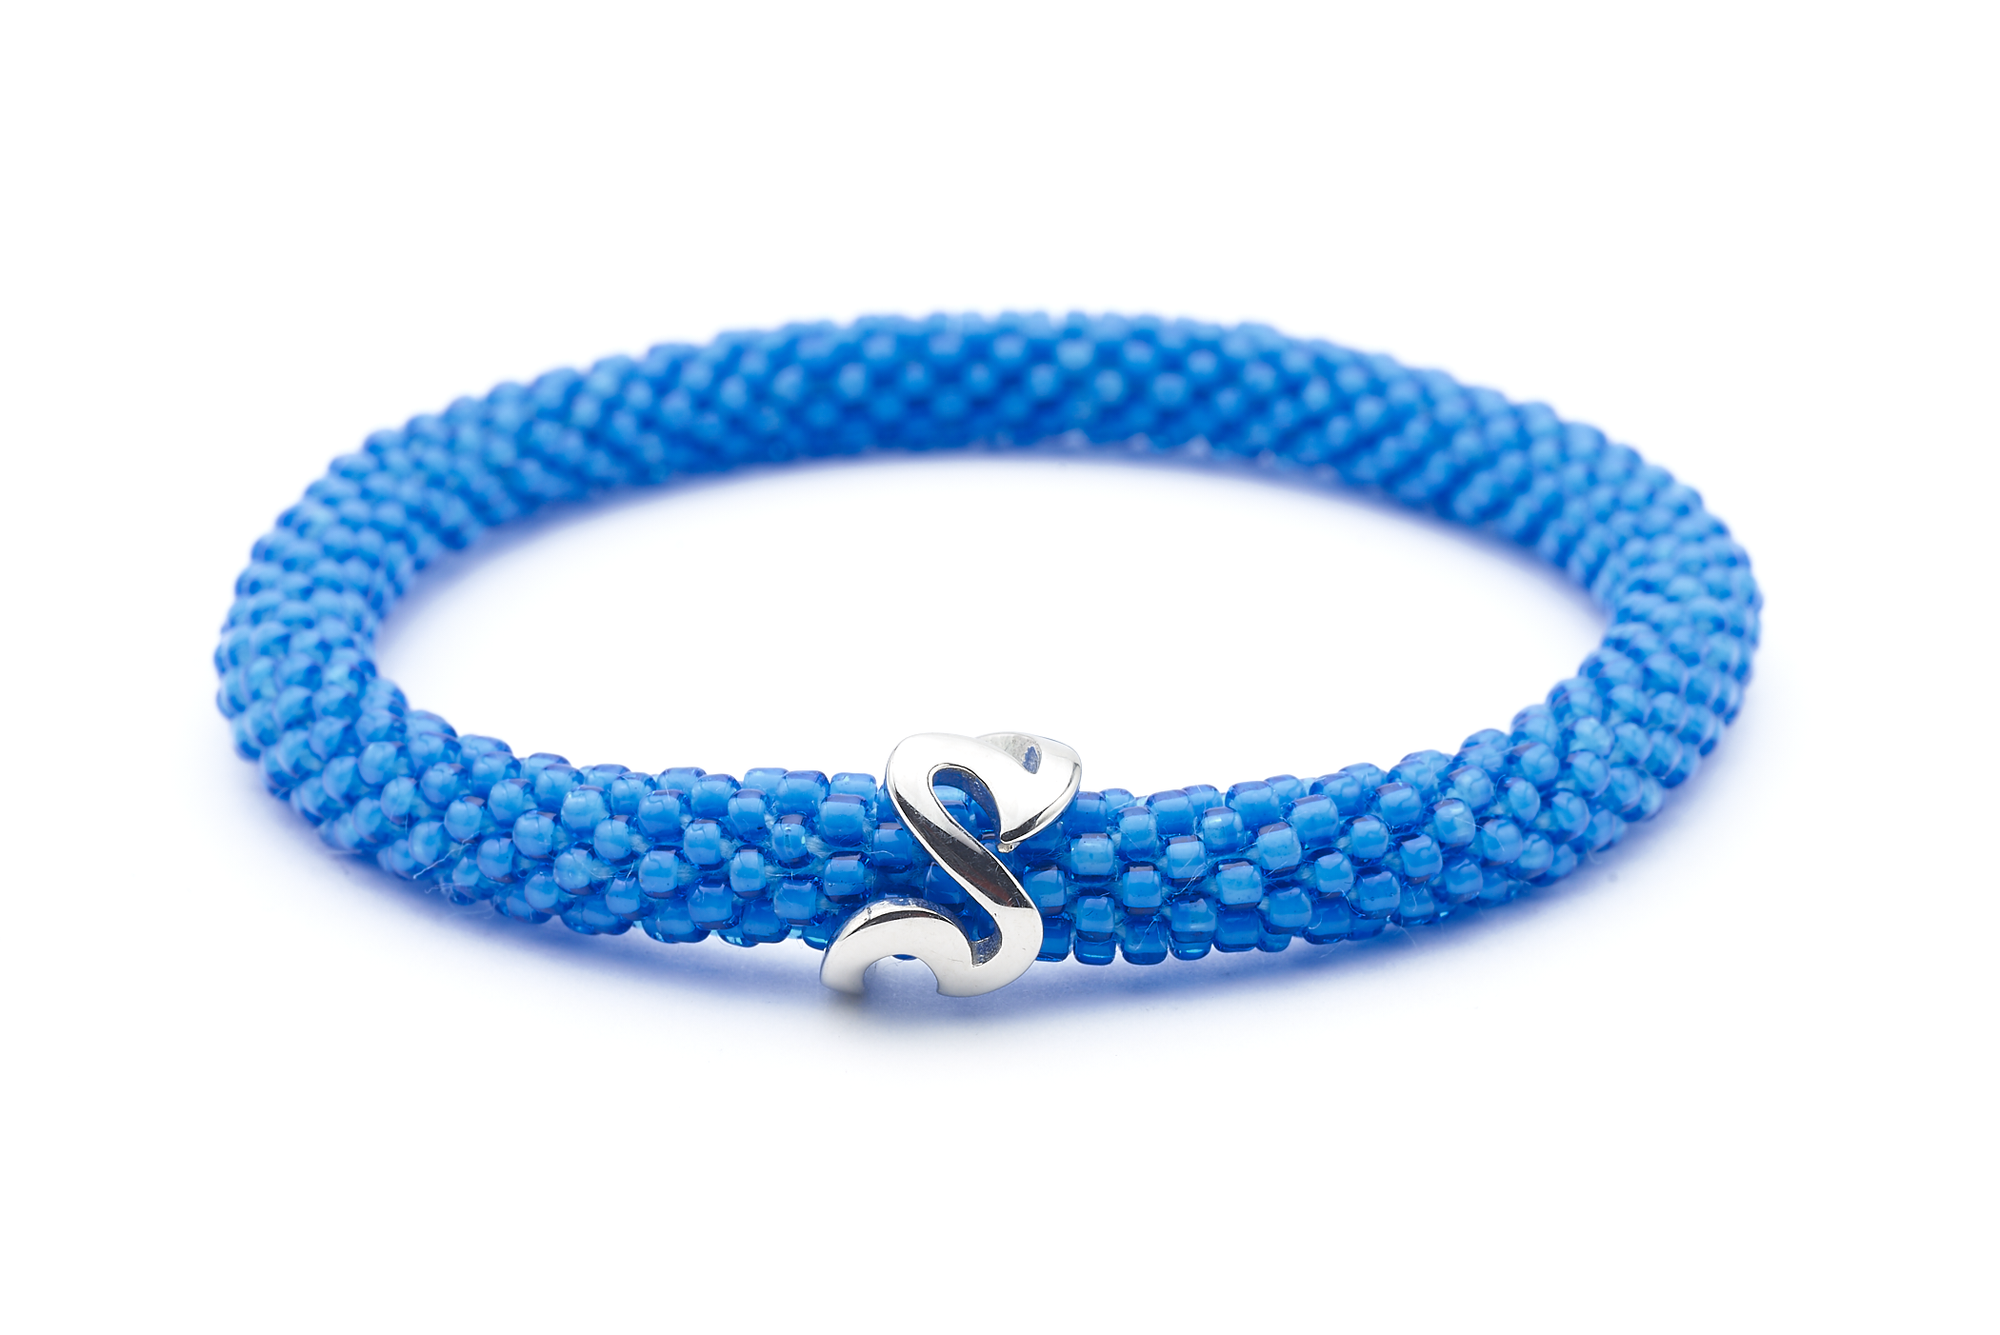 Sashka Co. Charm Bracelet Blue w/ Silver Charm Limited Edition Wave Charm Bracelet - Extended 8"